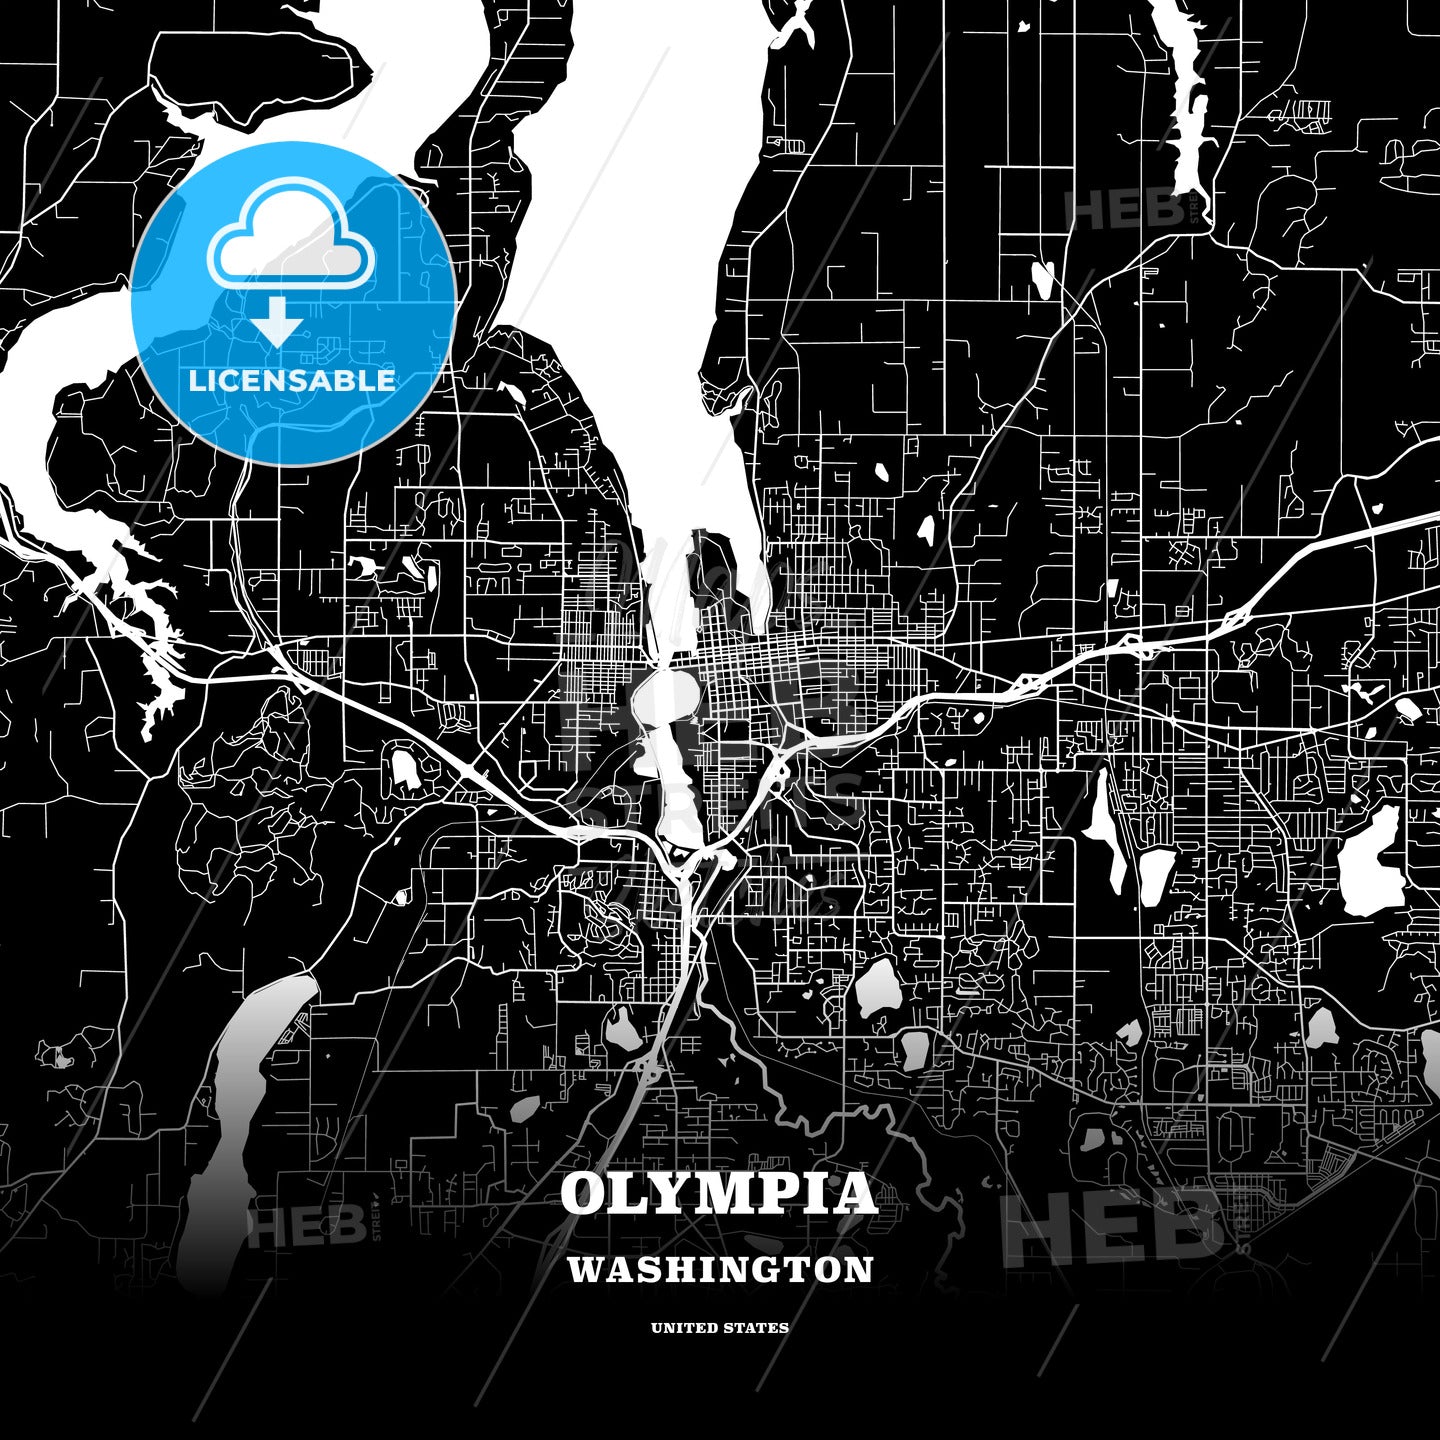 Olympia, Washington, USA map